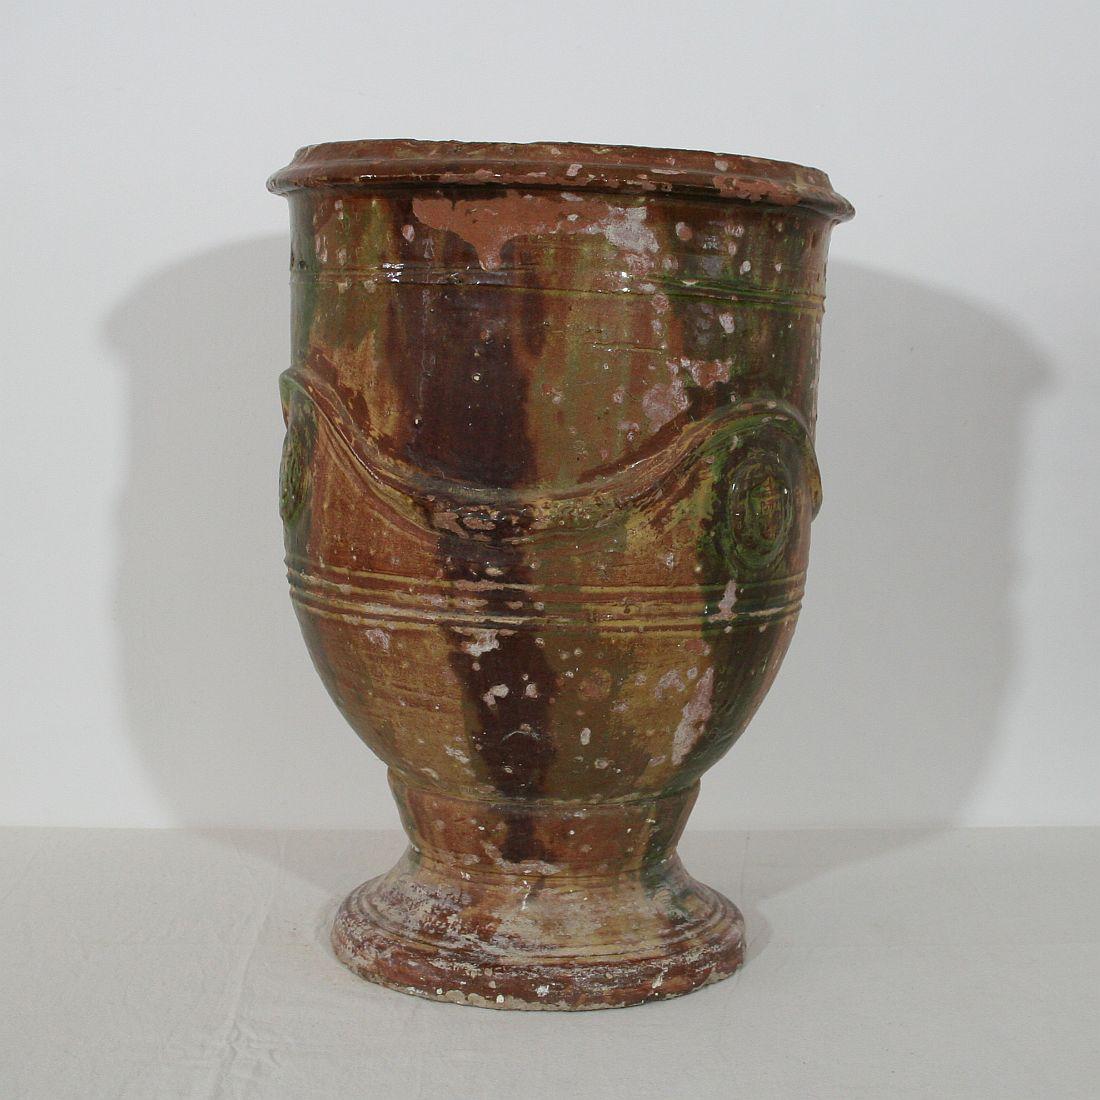 French Provincial 19th Century French Glazed Terracotta Anduze Vase, Planter